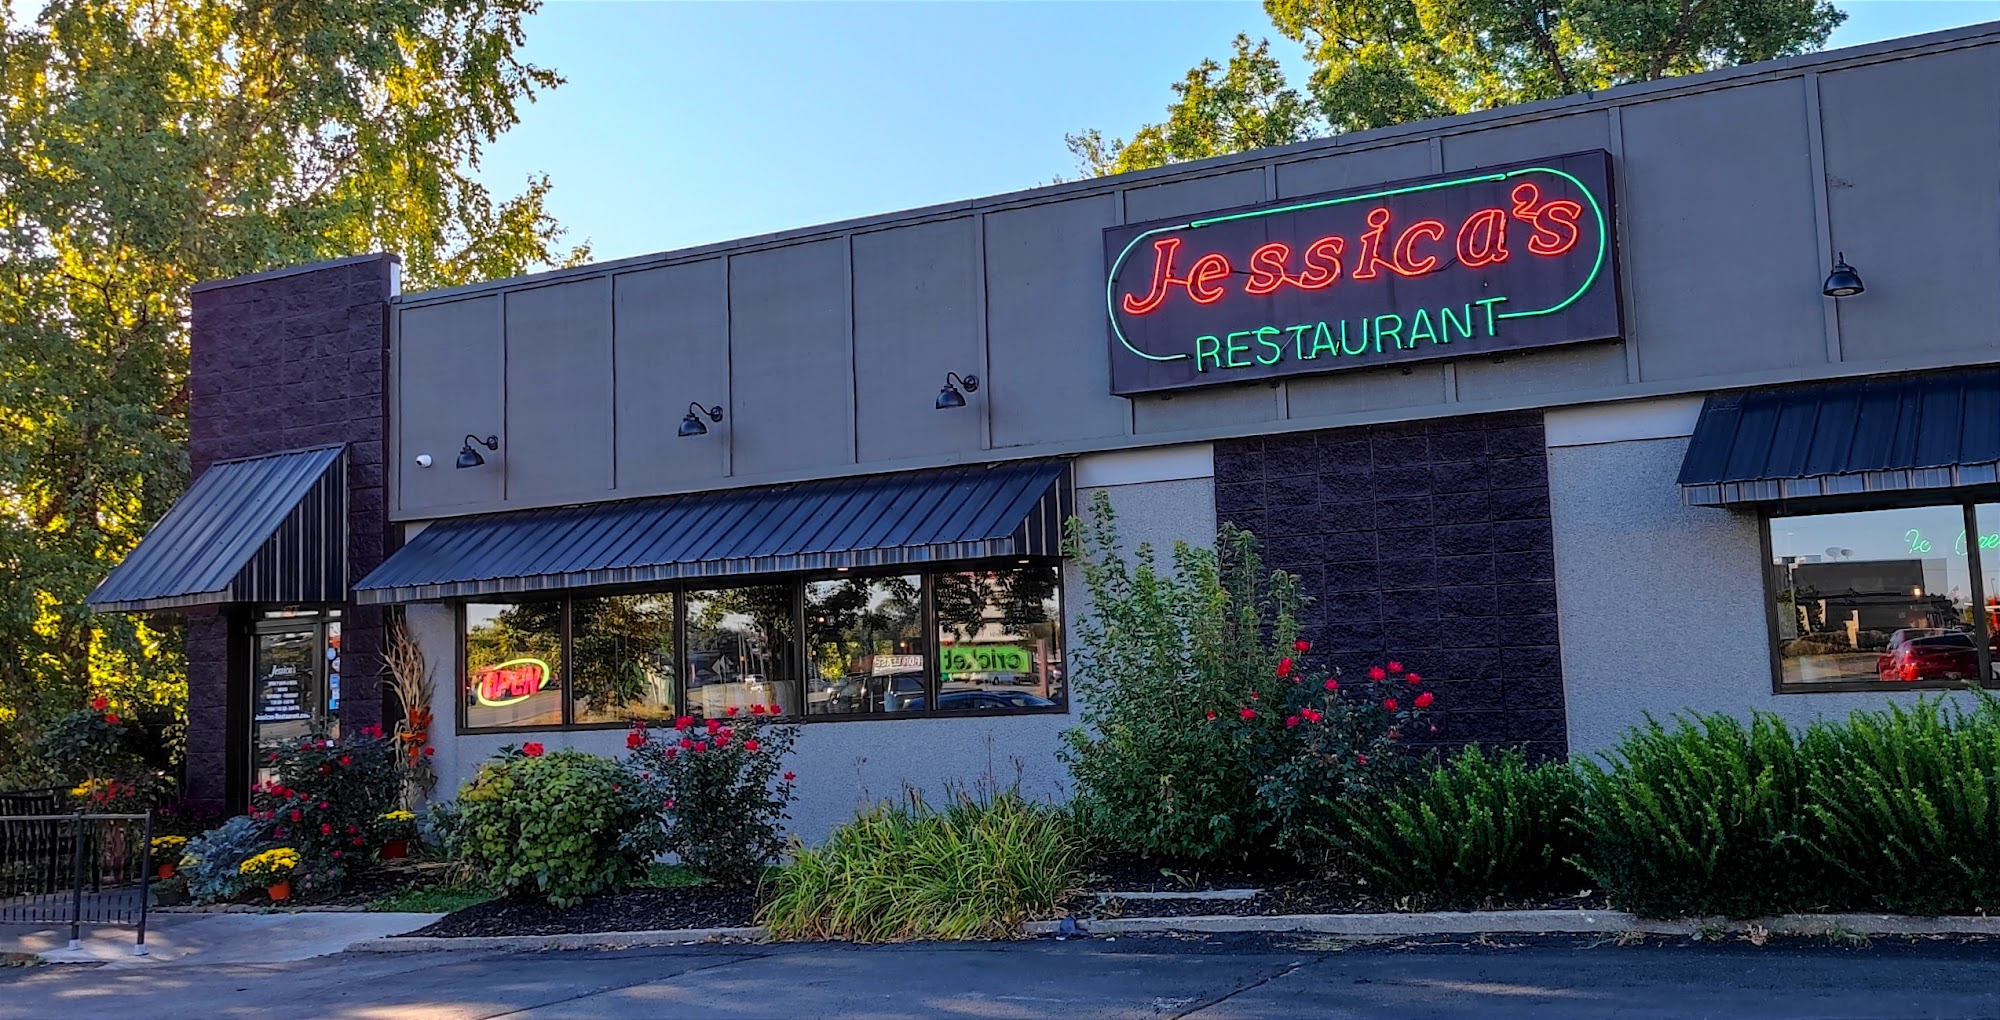 Jessica's Restaurant